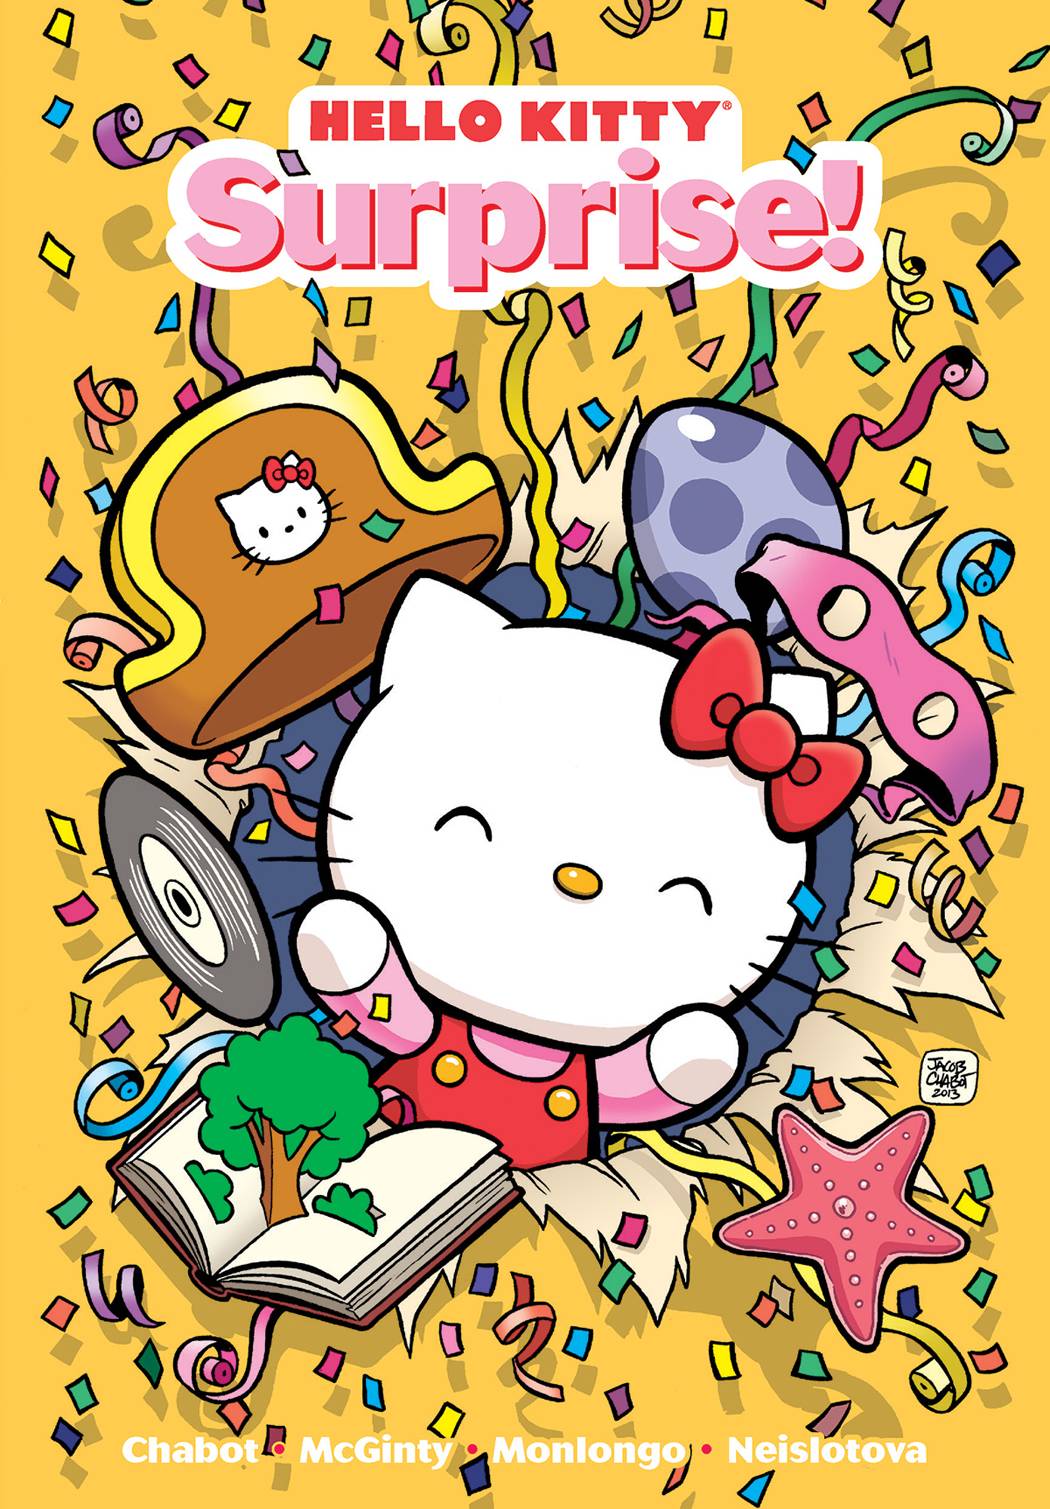 Hello Kitty Graphic Novel Surprise